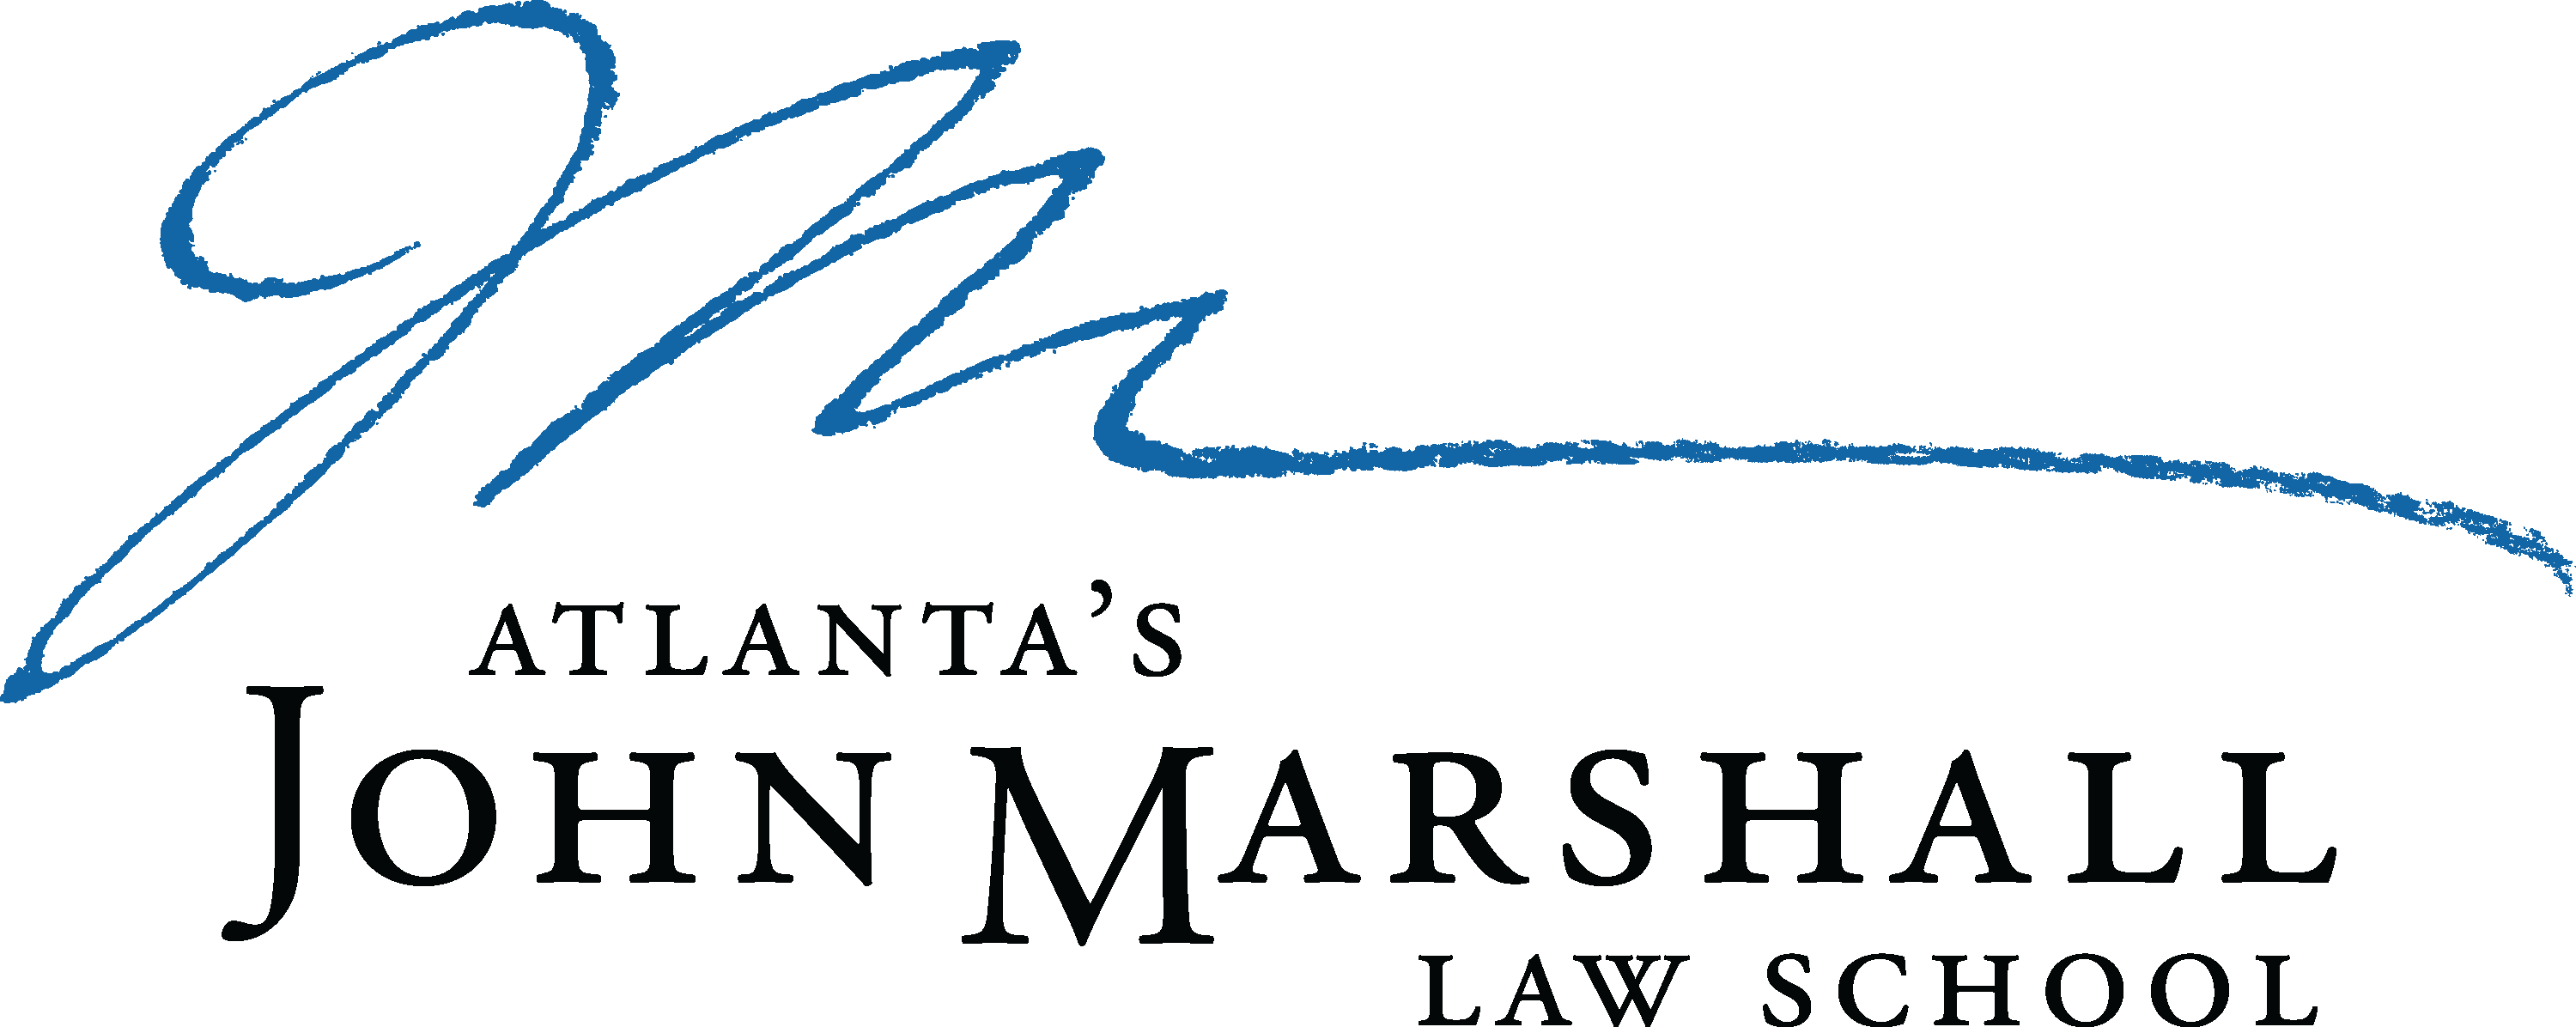 Atlanta's John Marshall Law School